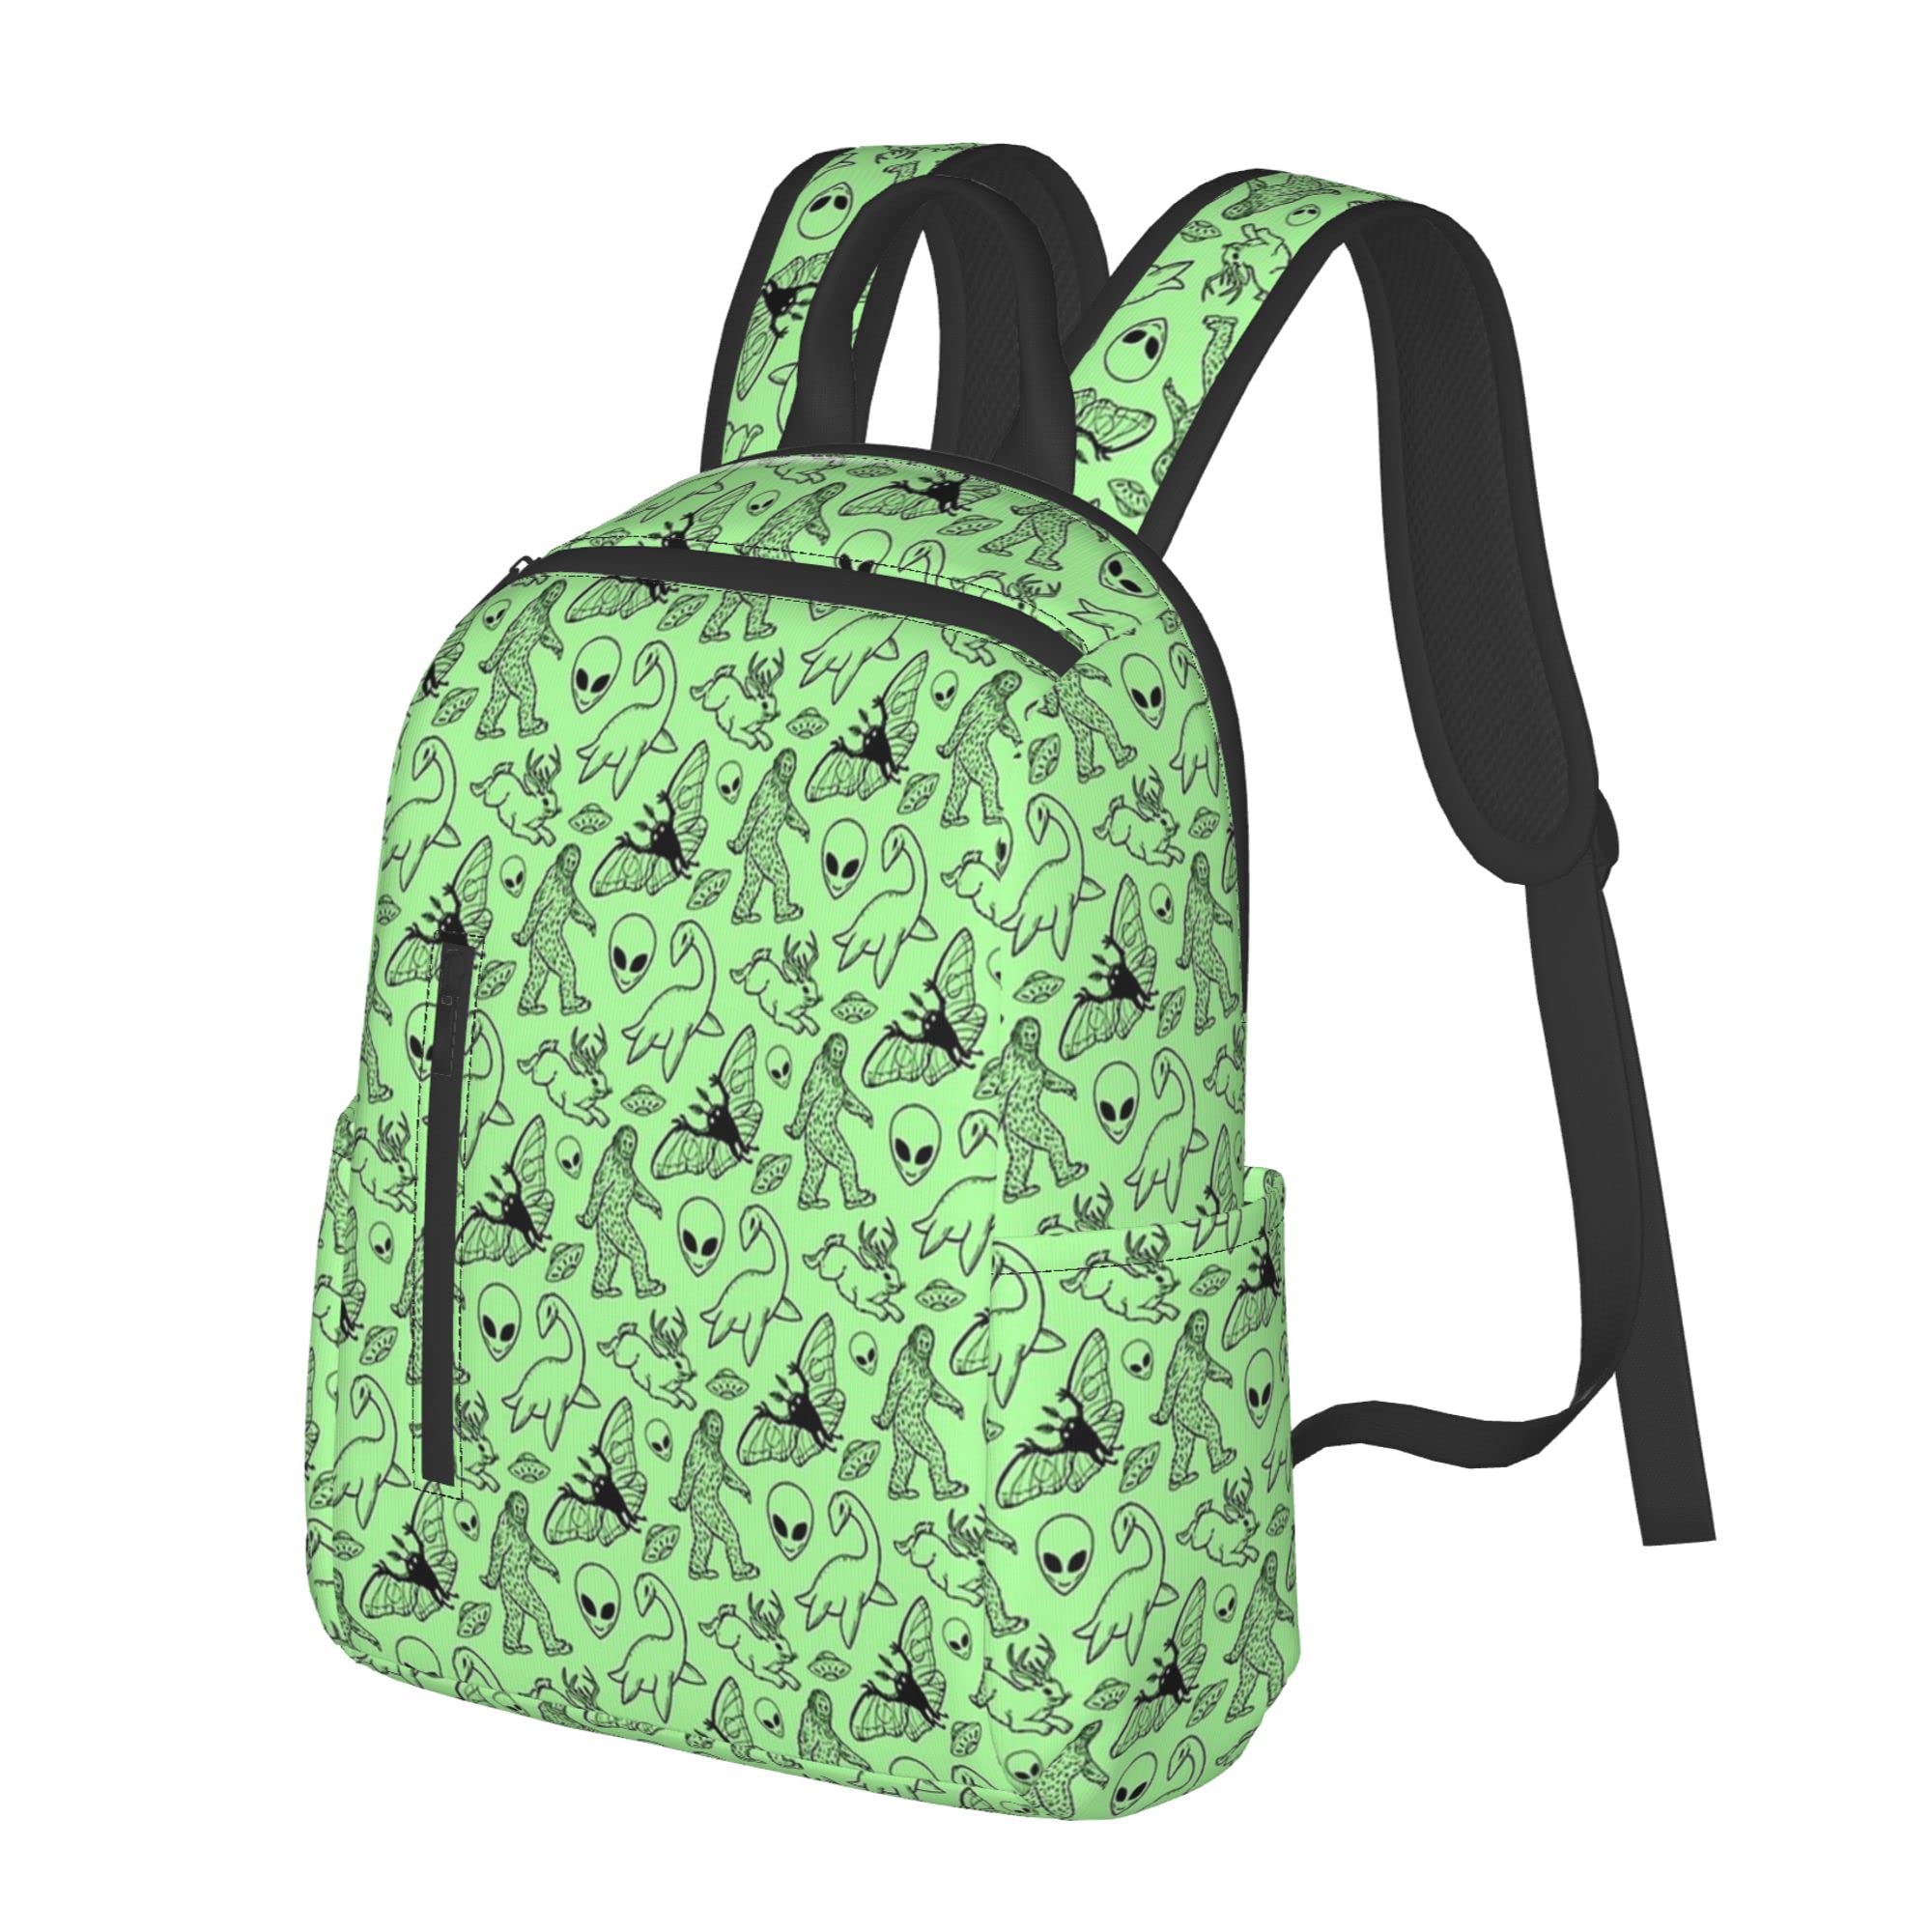 SWEET TANG Backpack Travel, Work Bookbag Aliens Savage Dinosaurs Green Casual Daypacks with Water Bottle Pocket